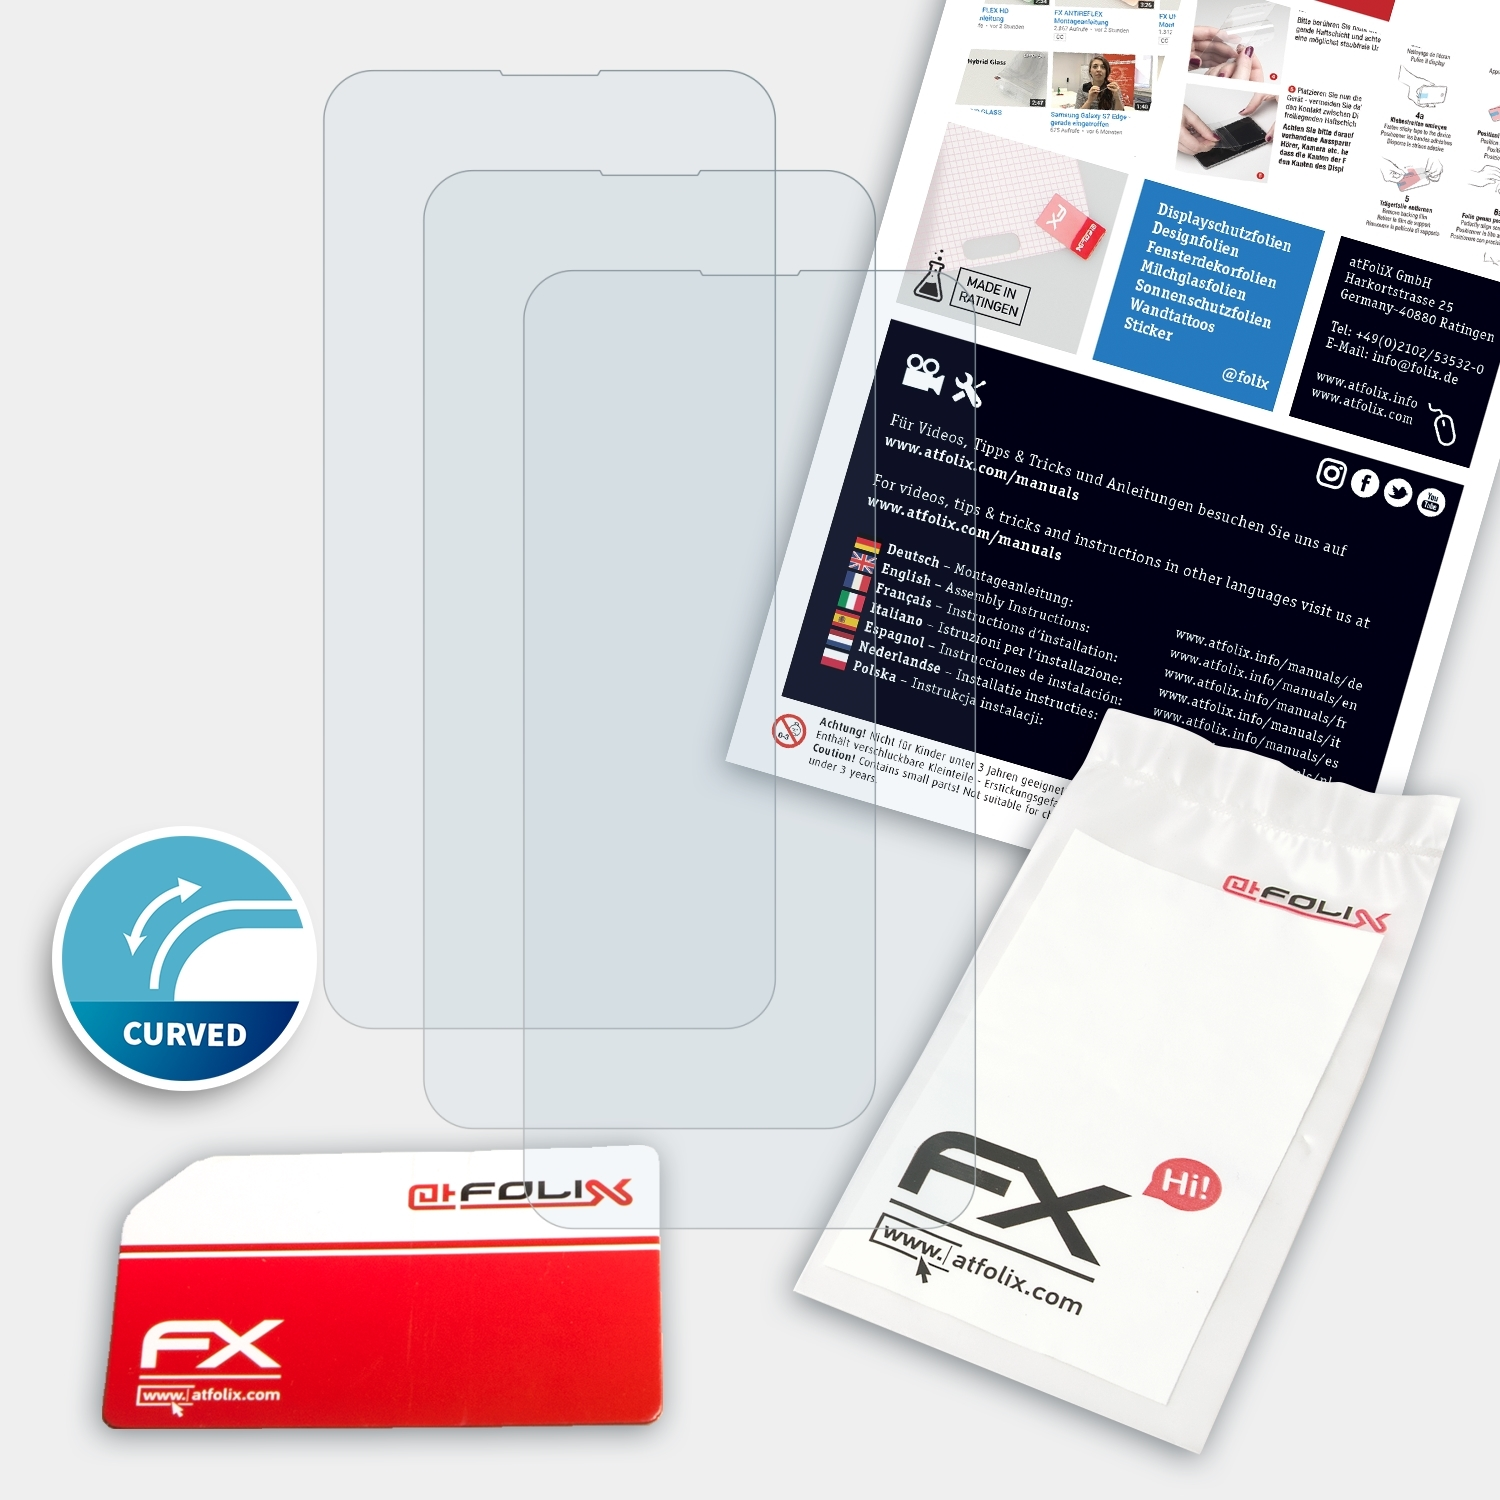 ATFOLIX Vivo X27) 3x Displayschutz(für FX-ActiFleX